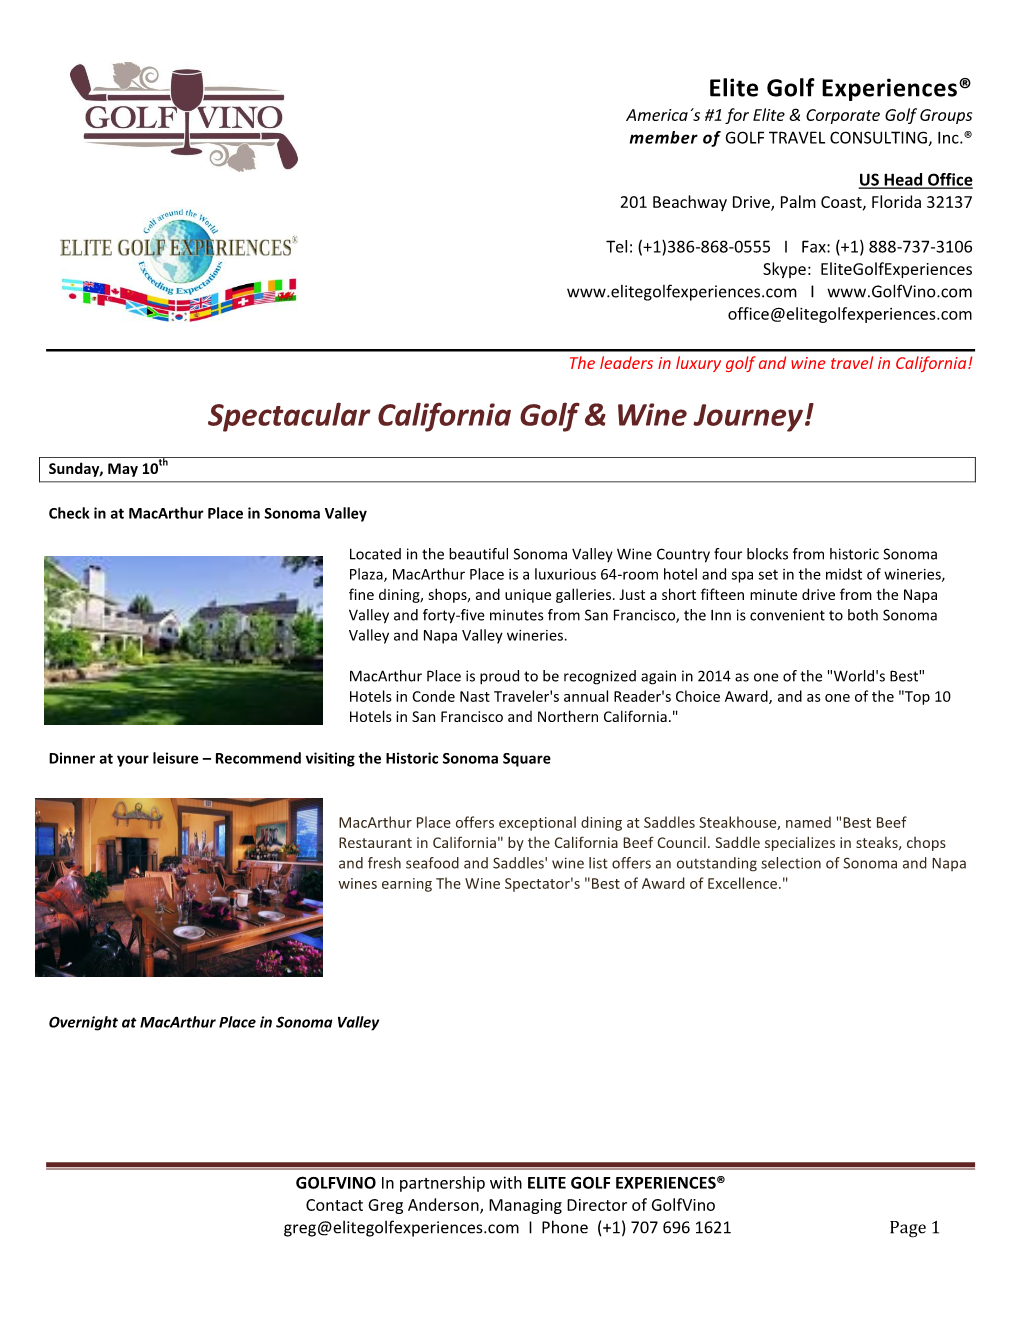 Spectacular California Golf & Wine Journey!